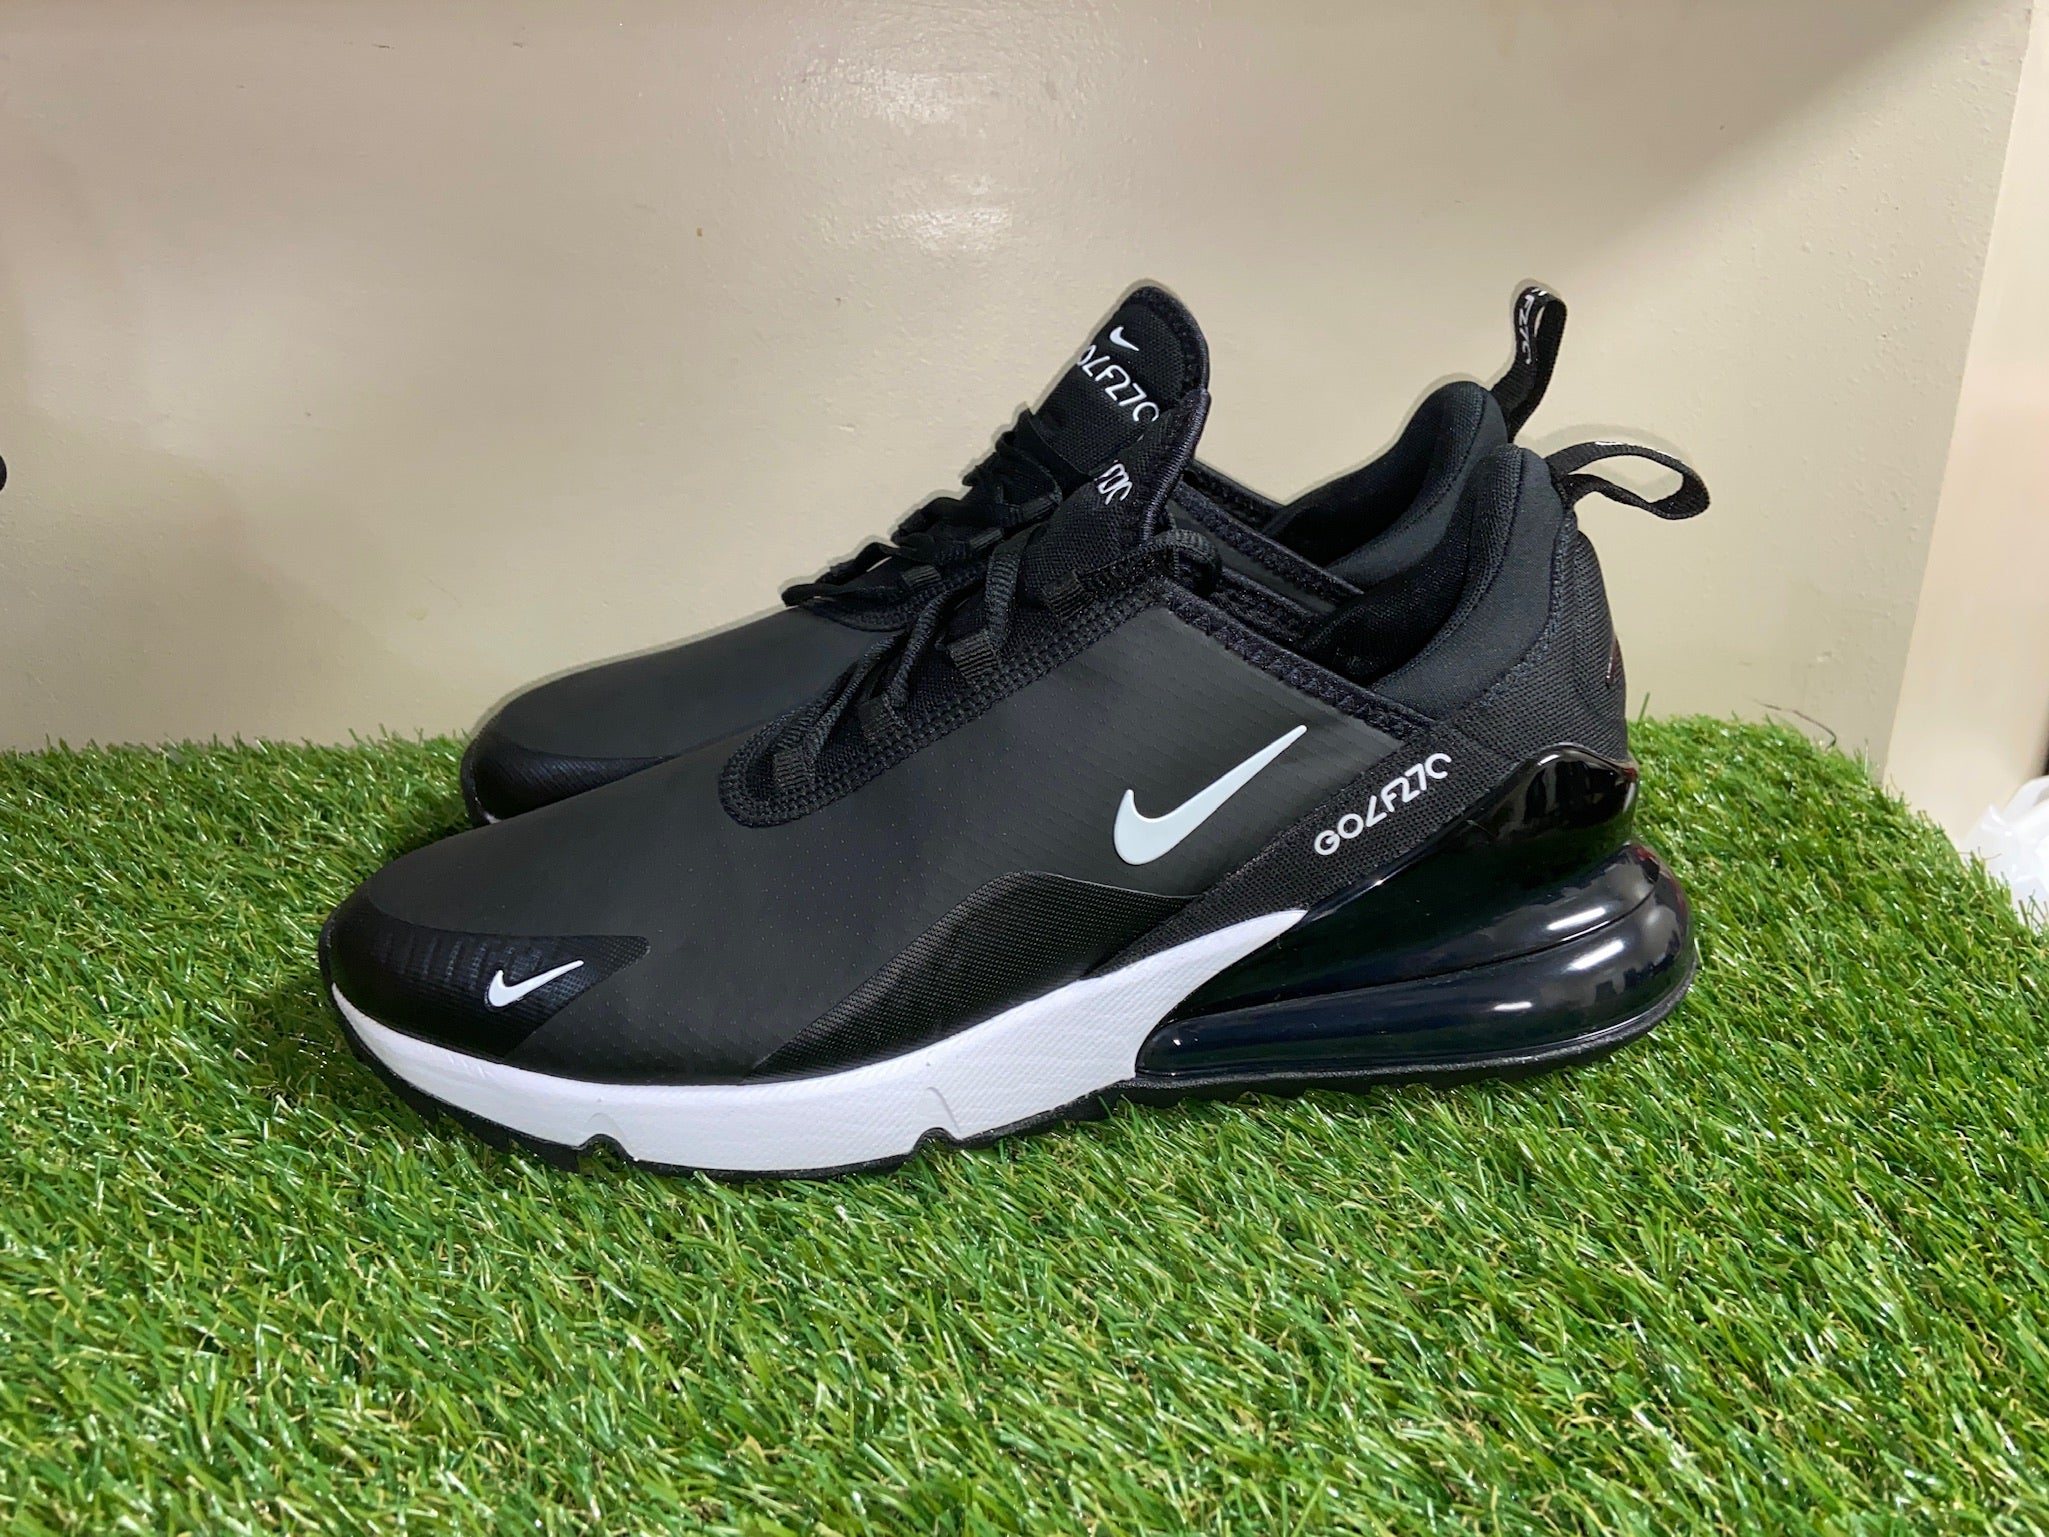 Nike Air Max  G Golf Men's Shoes Black/Hot Punch/White